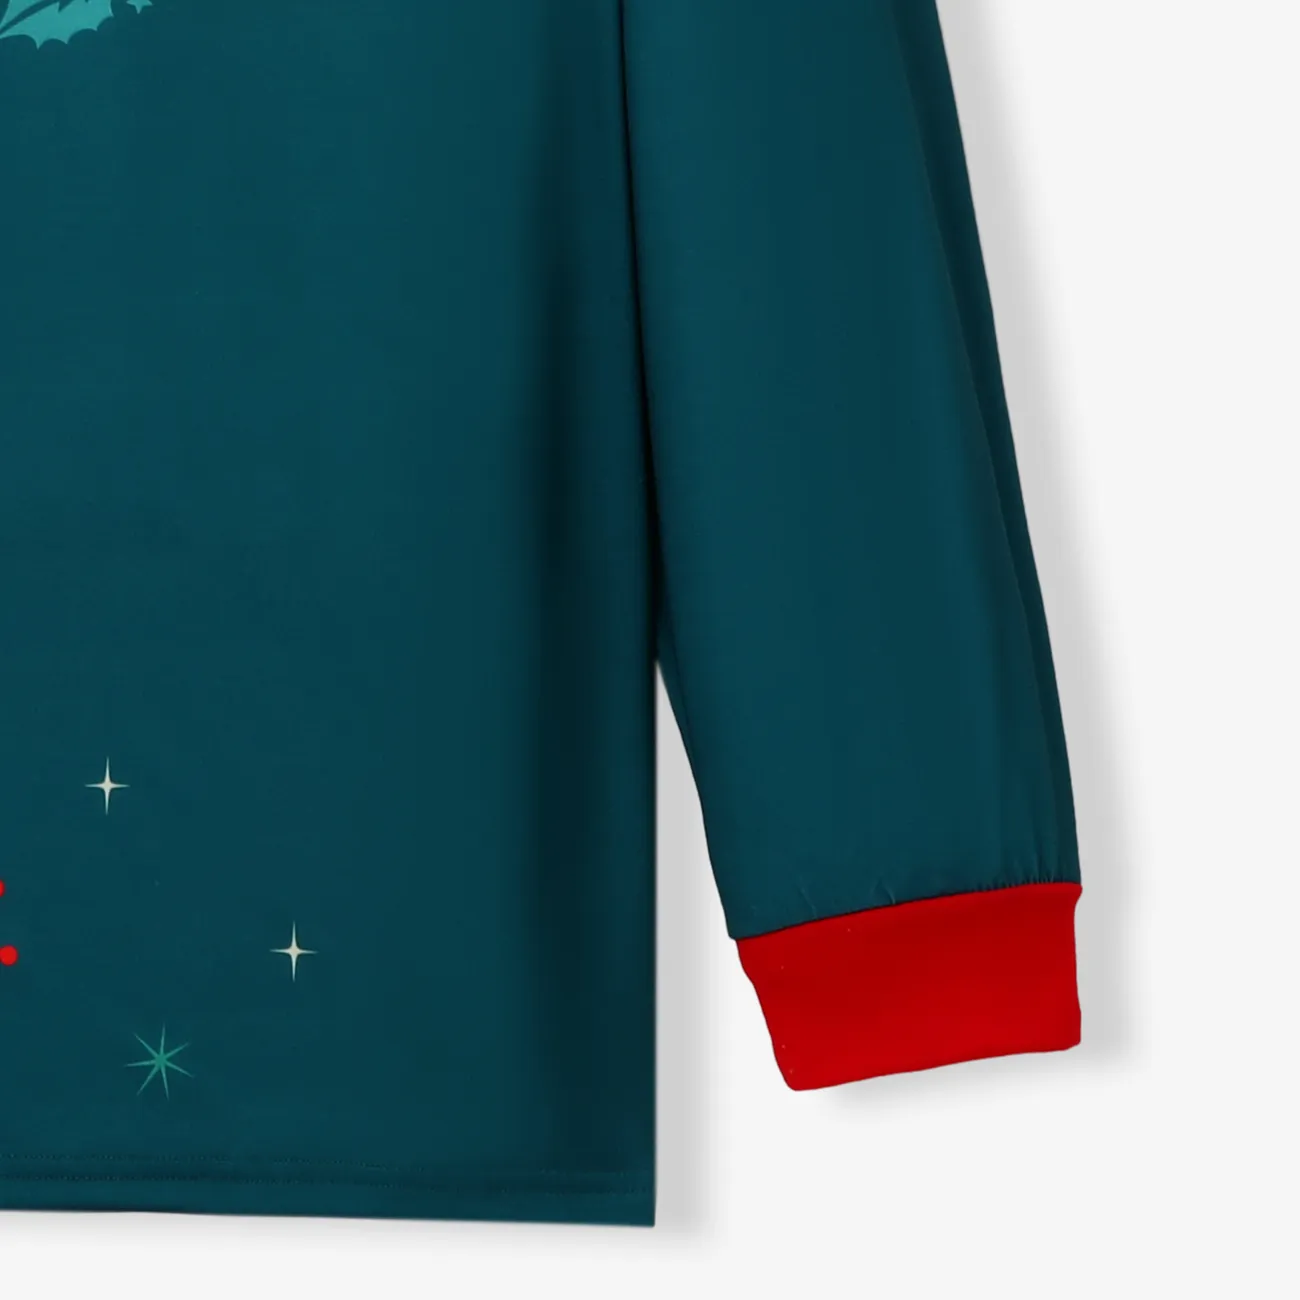 A Christmas Story Family Matching Christmas Stars Fra Gee Lay Top and Allover Pants Pajamas Sets Multi-color big image 1